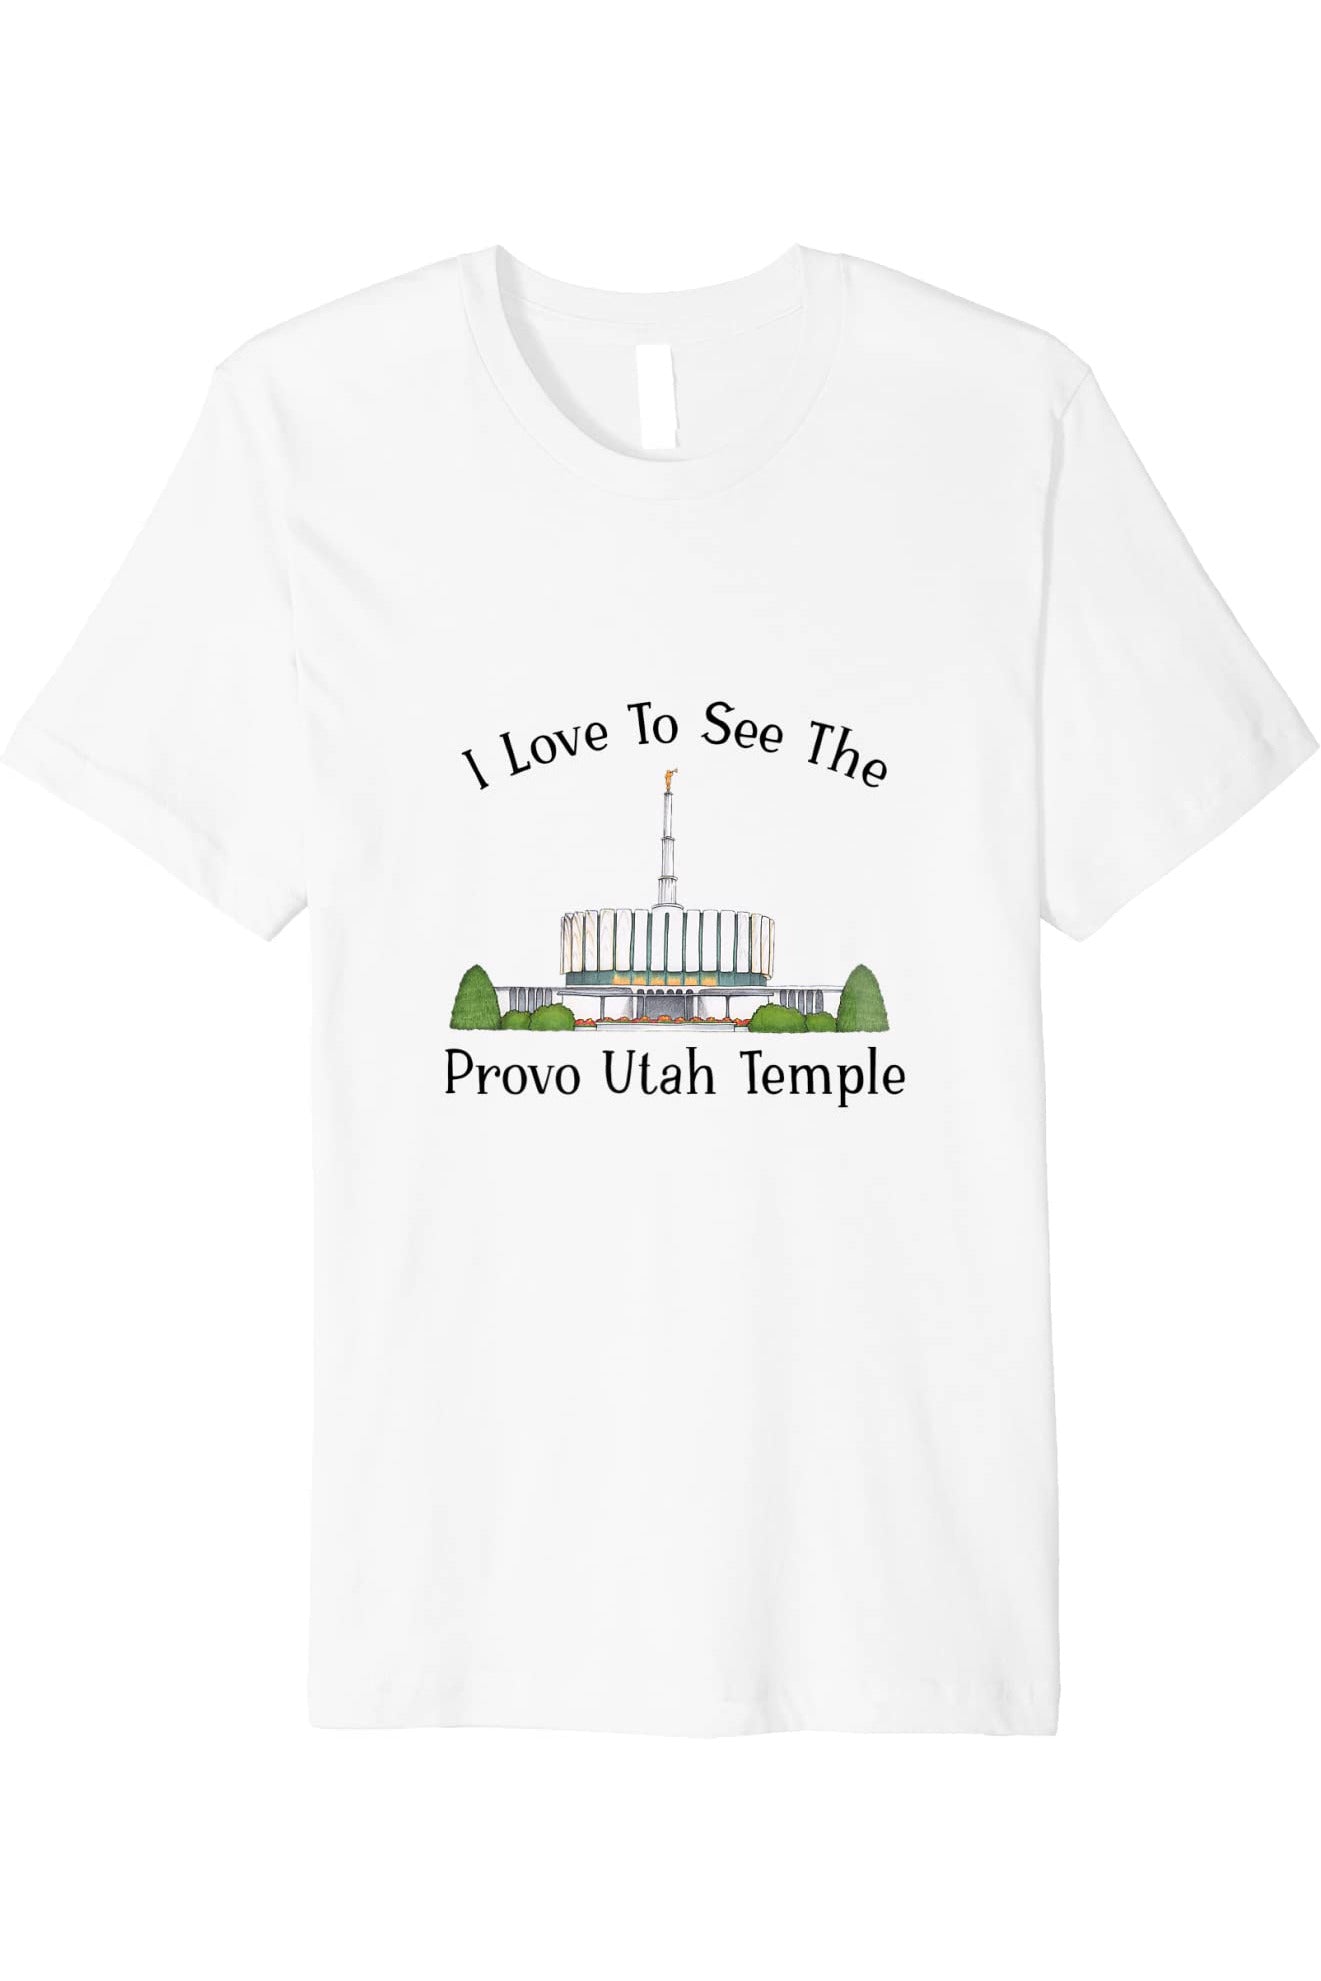 Provo Utah Temple T-Shirt - Premium - Happy Style (English) US